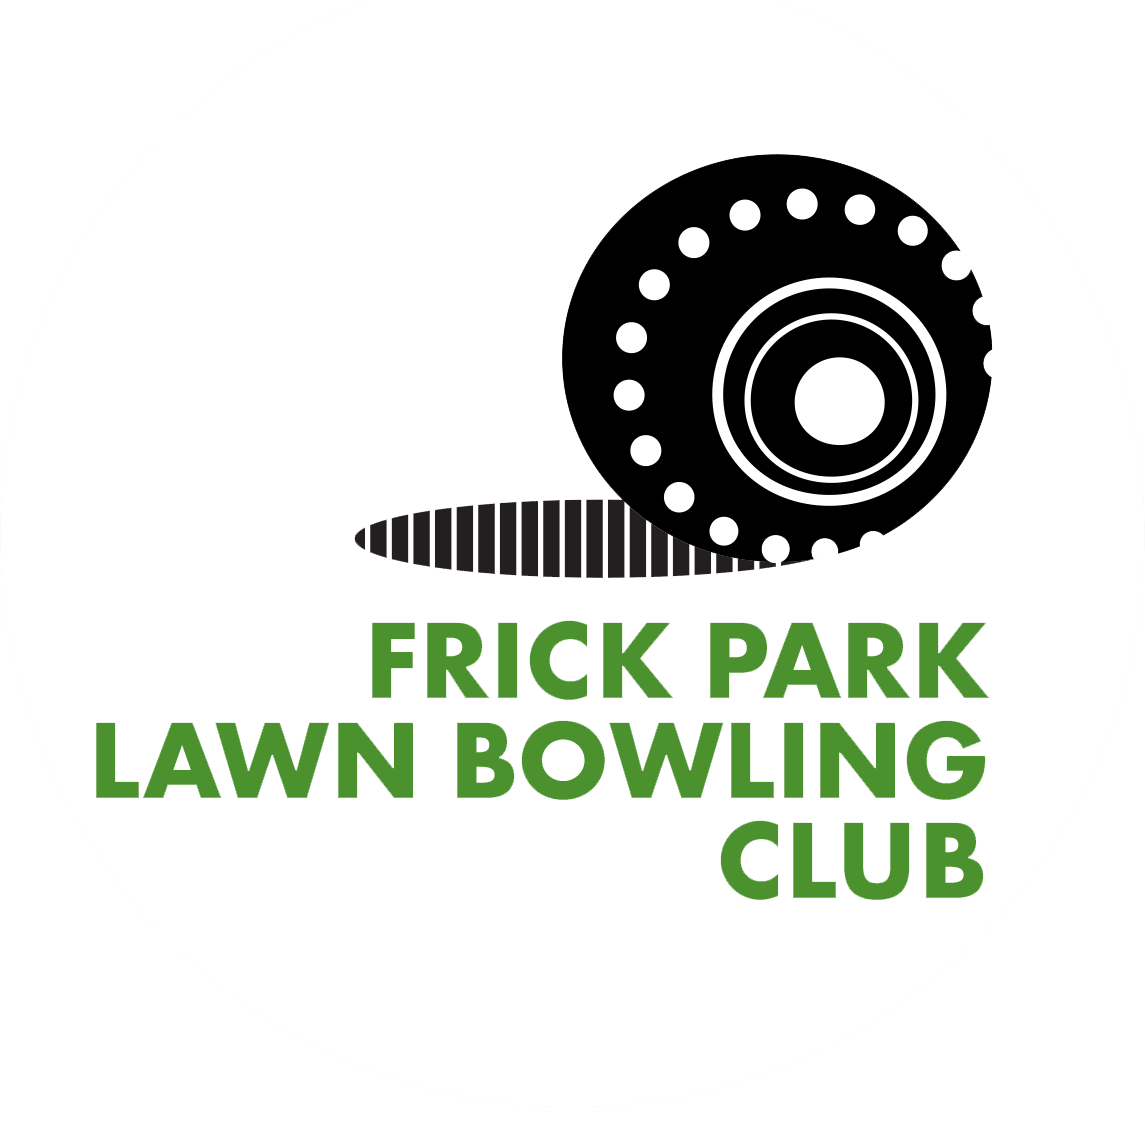 Frick Park Lawn Bowling Club